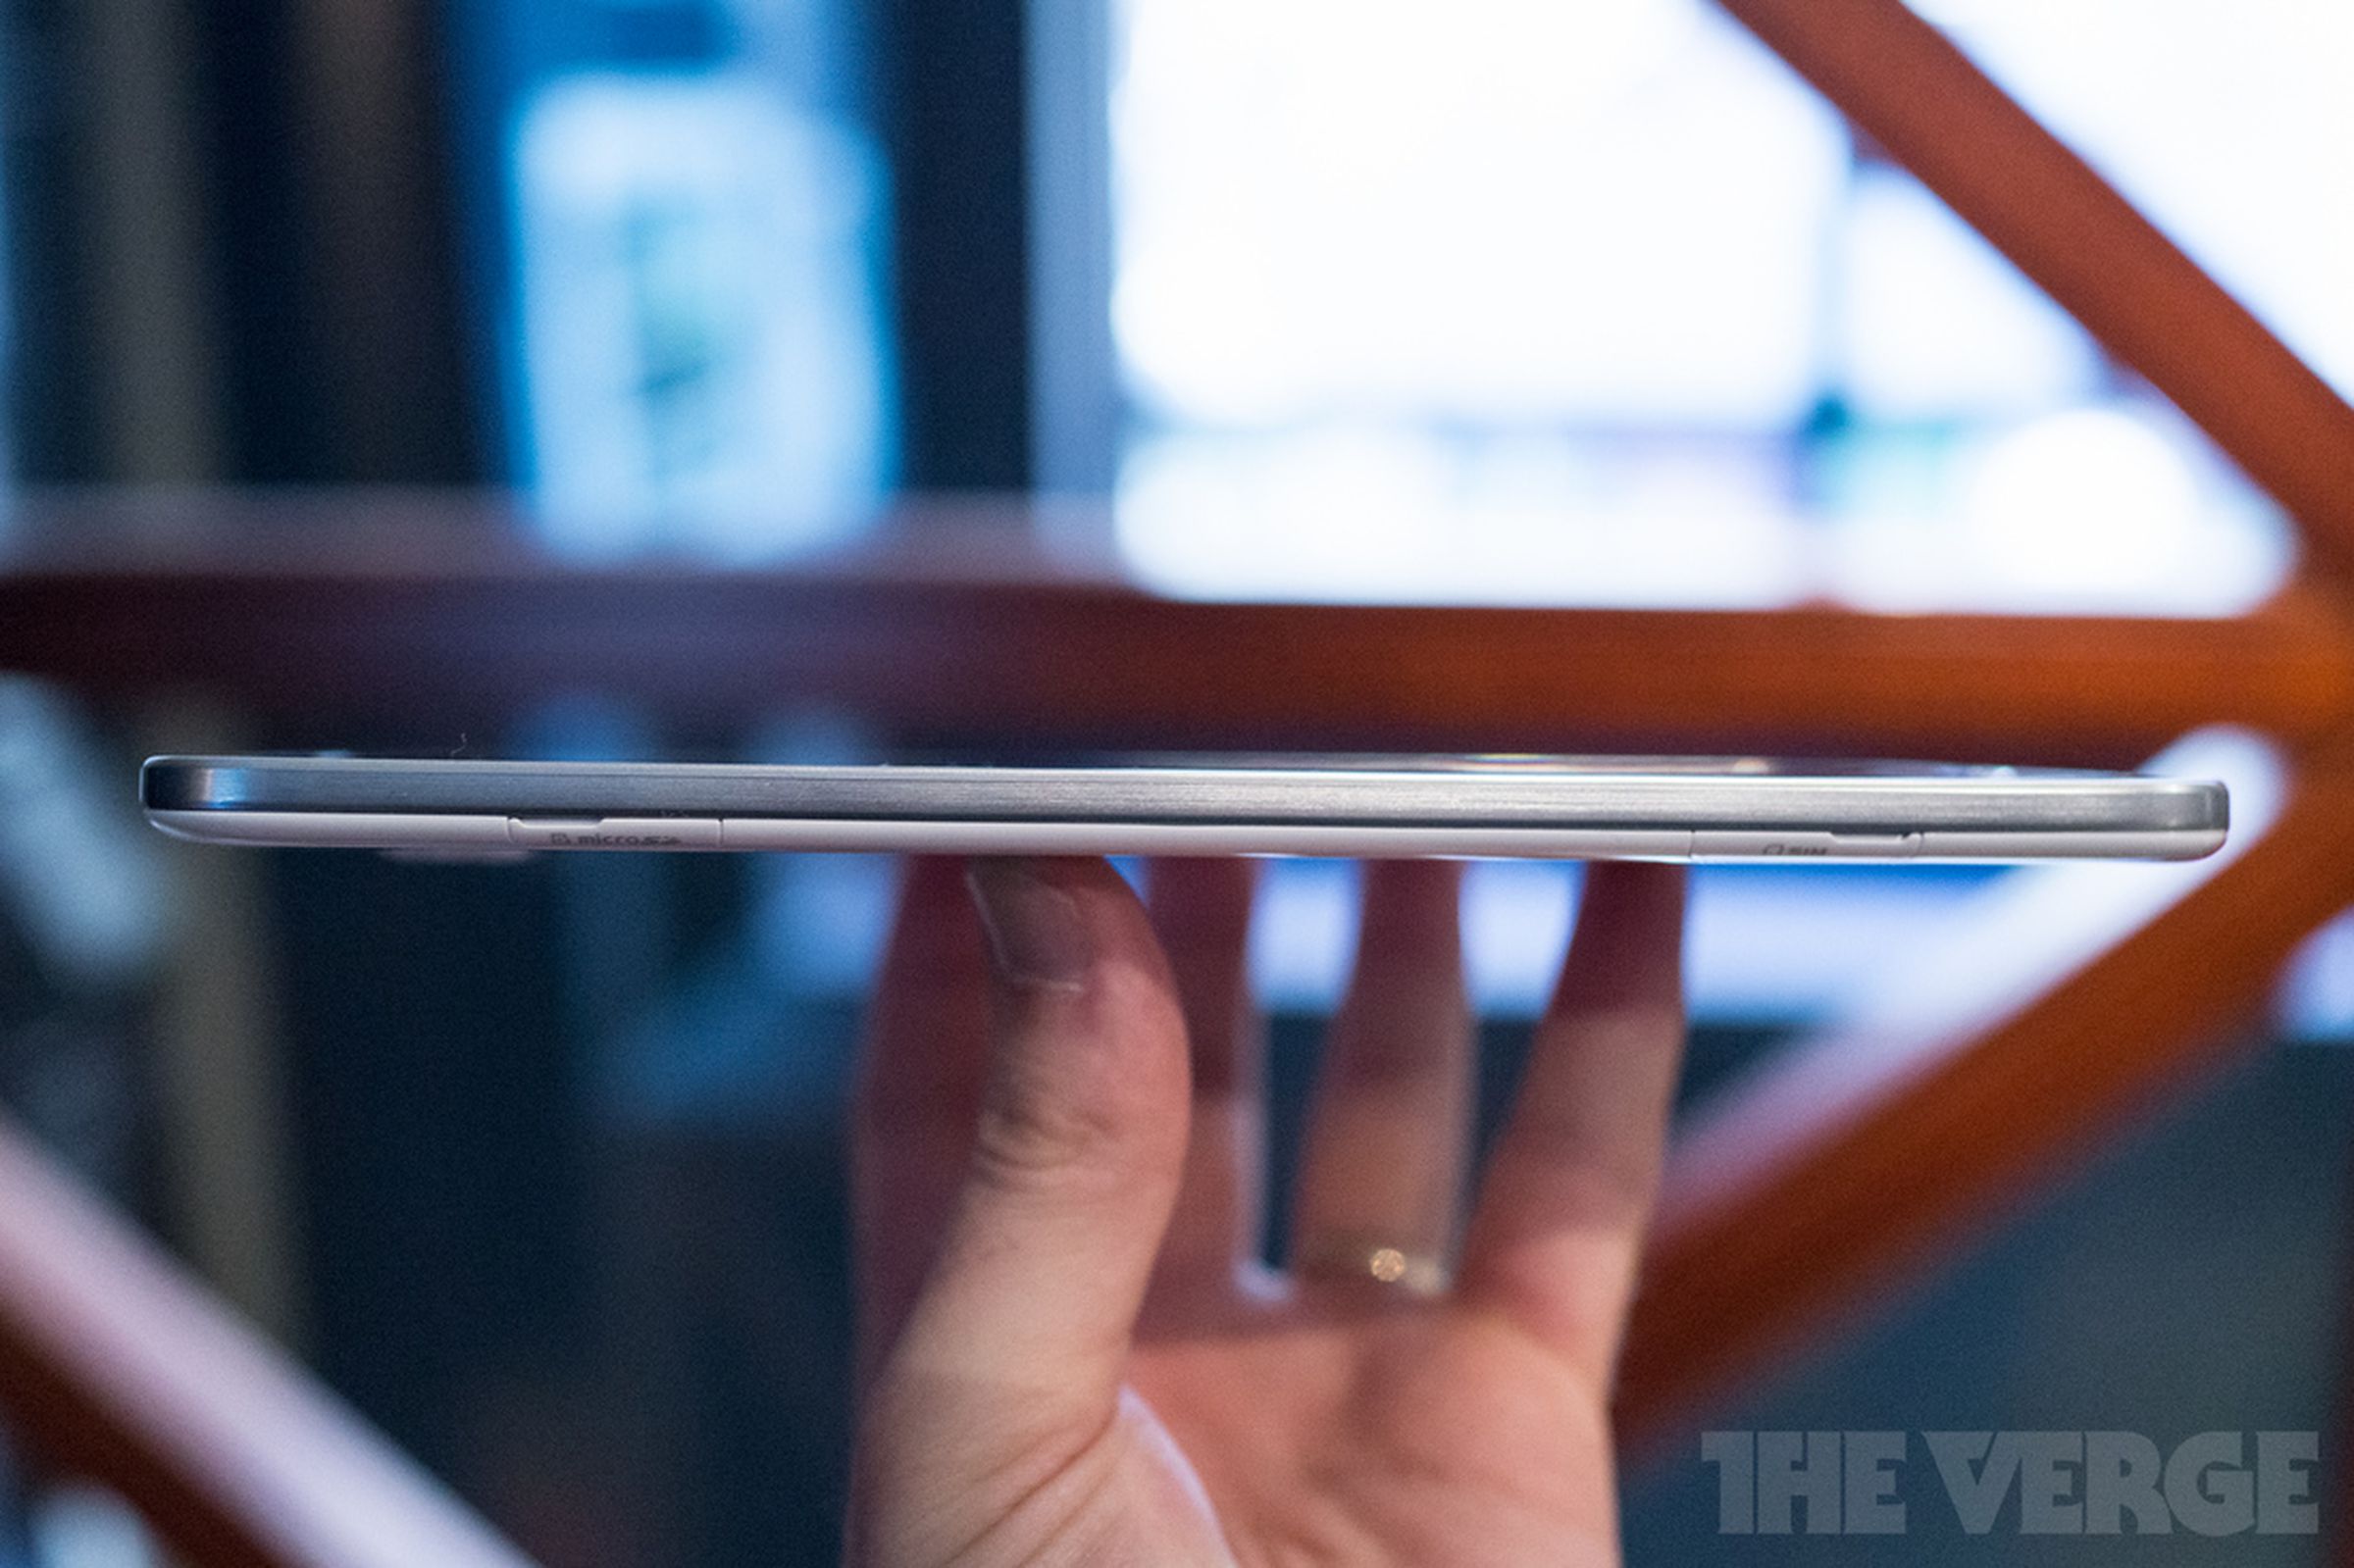 Samsung Galaxy Note 8.0 hands-on photos